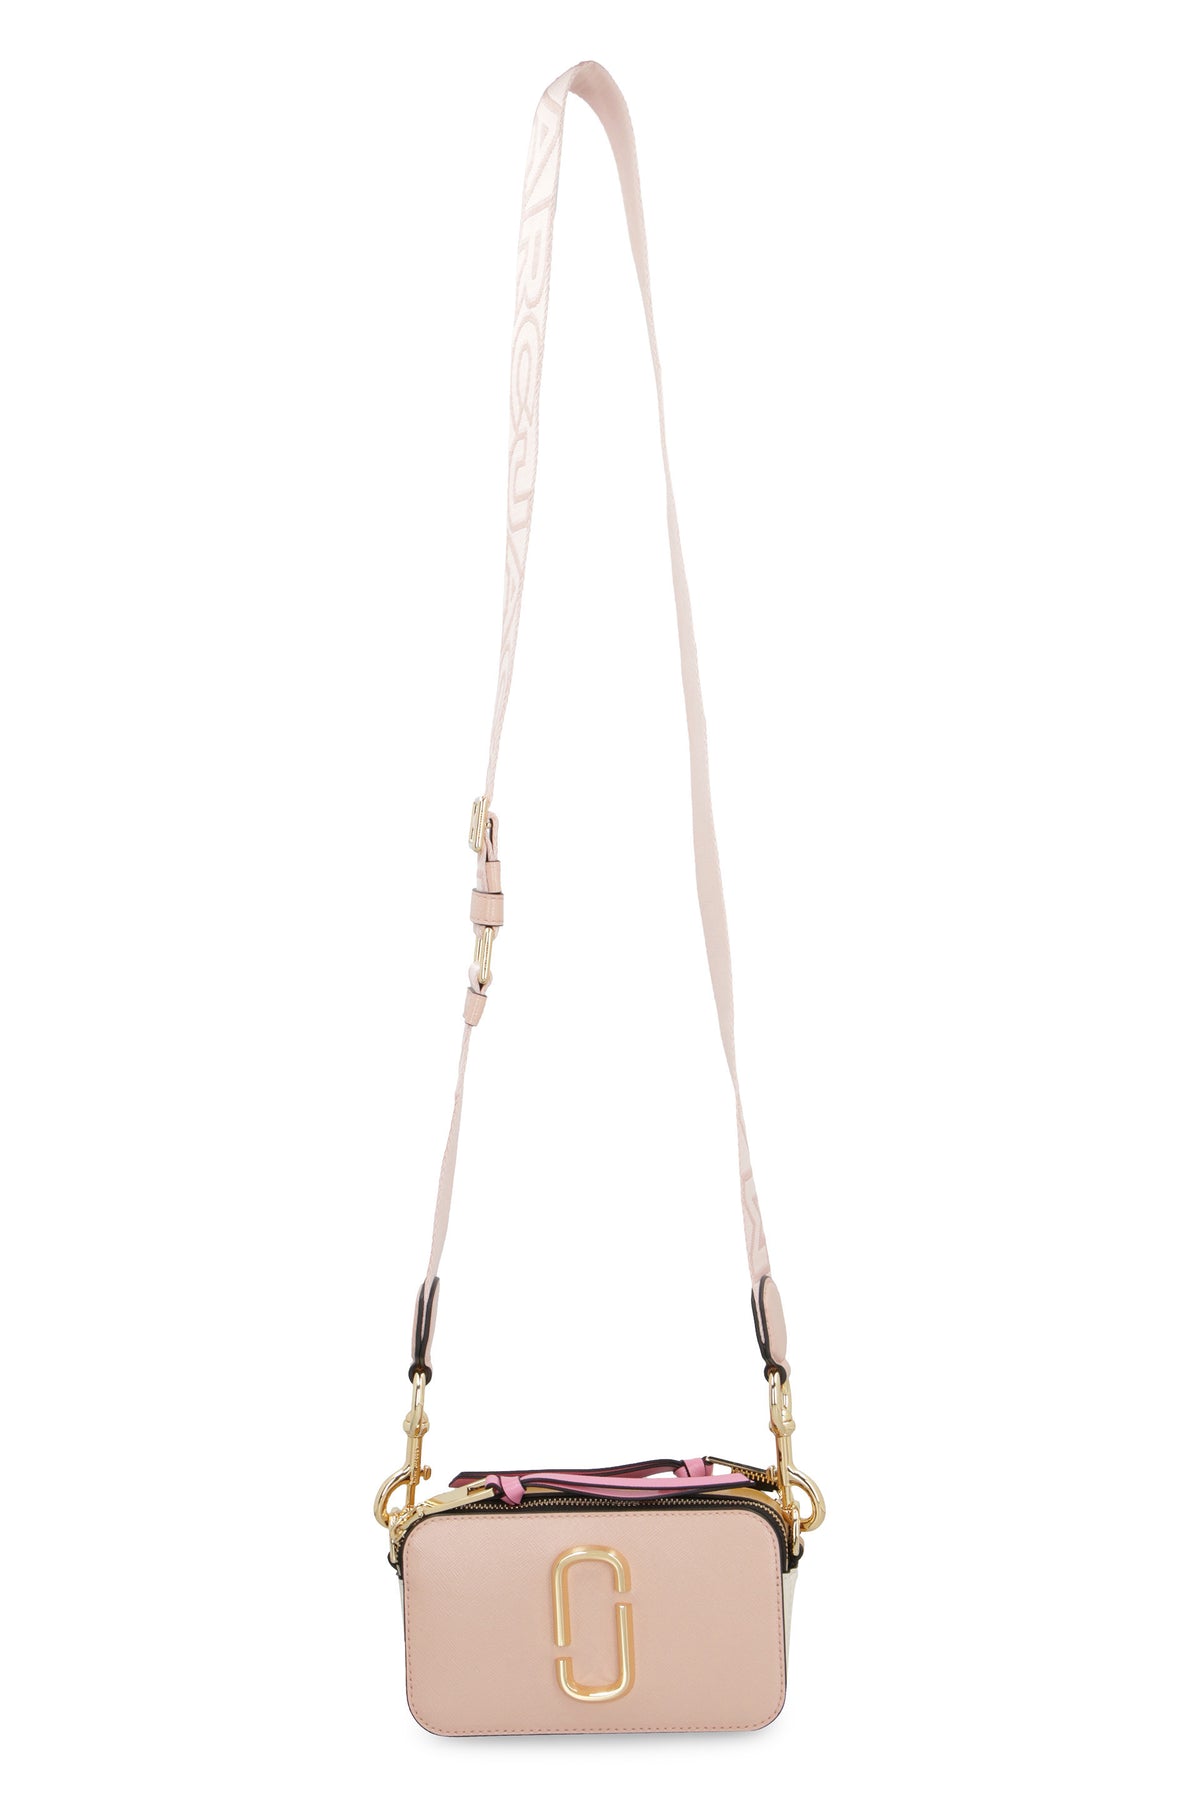 Handbags Marc Jacobs, Style code: 2s3hcr500h03-695- in 2023